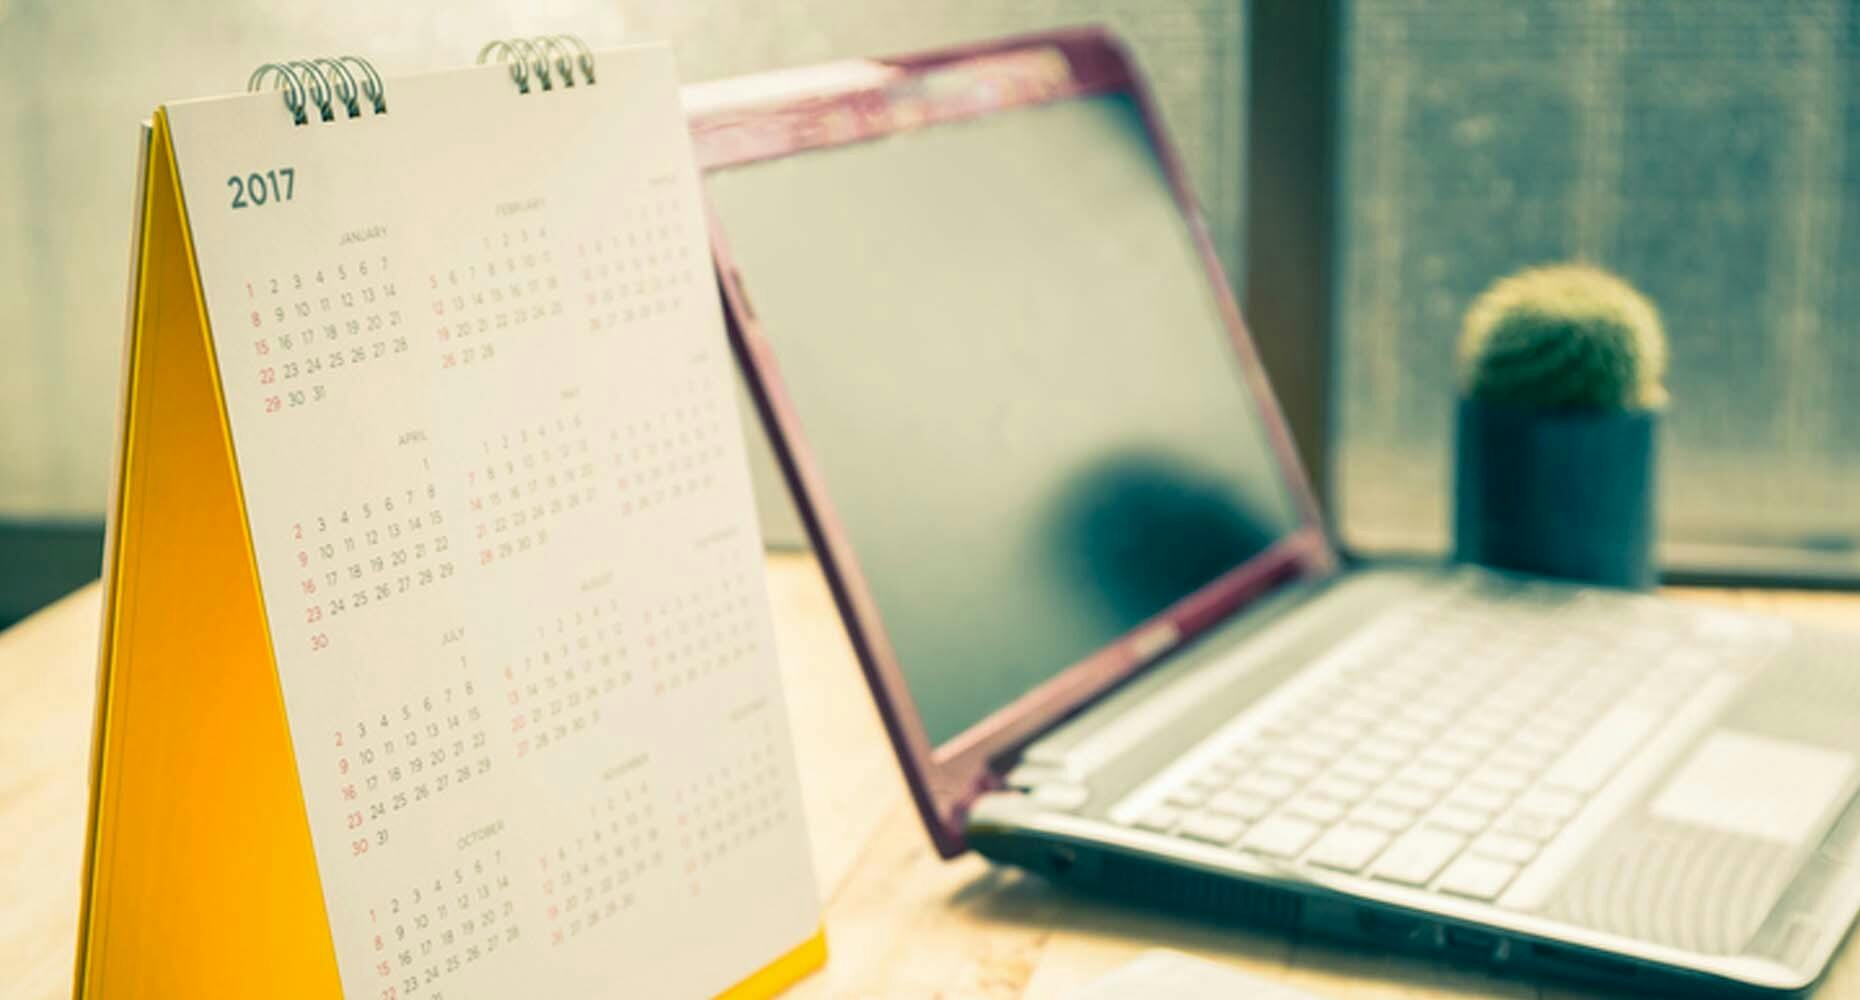 Calendar and laptop on a desk